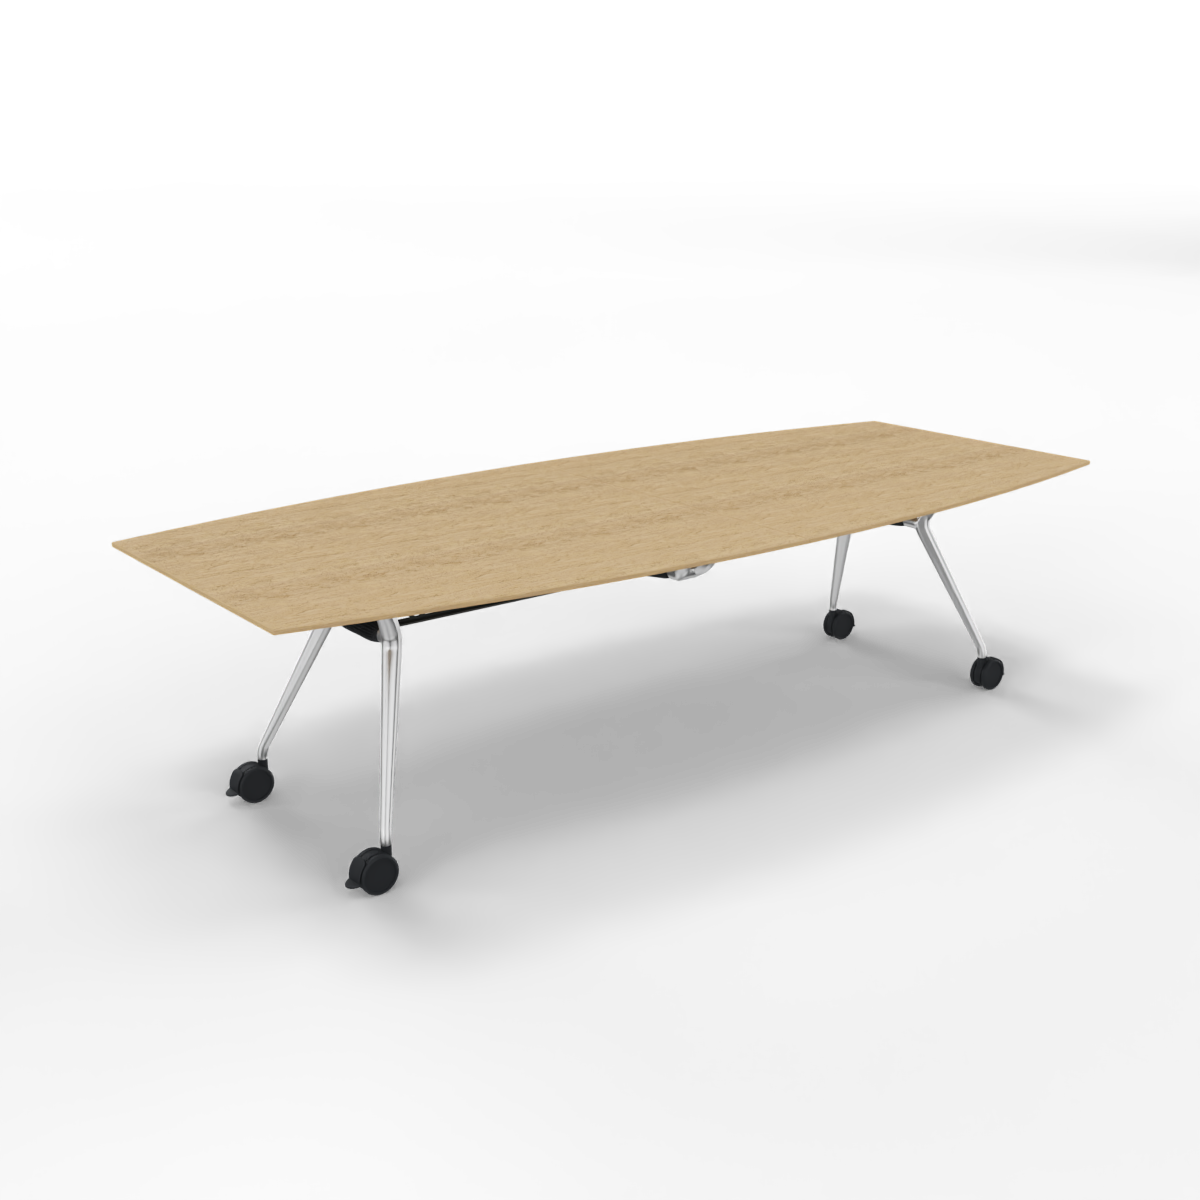 K+N Summa folding table